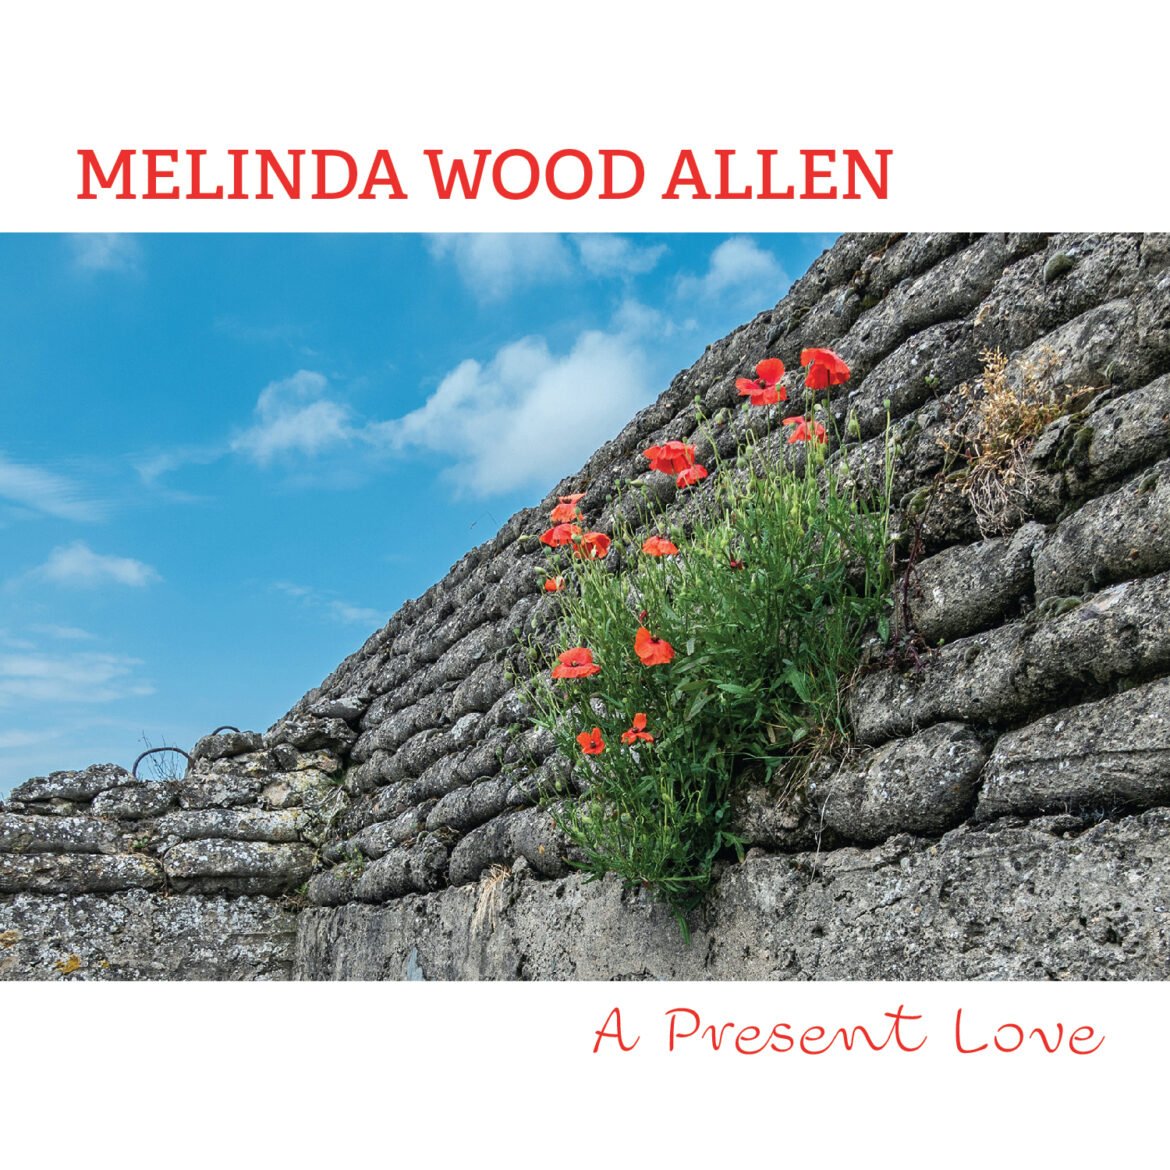 A Present Love - CD cover art